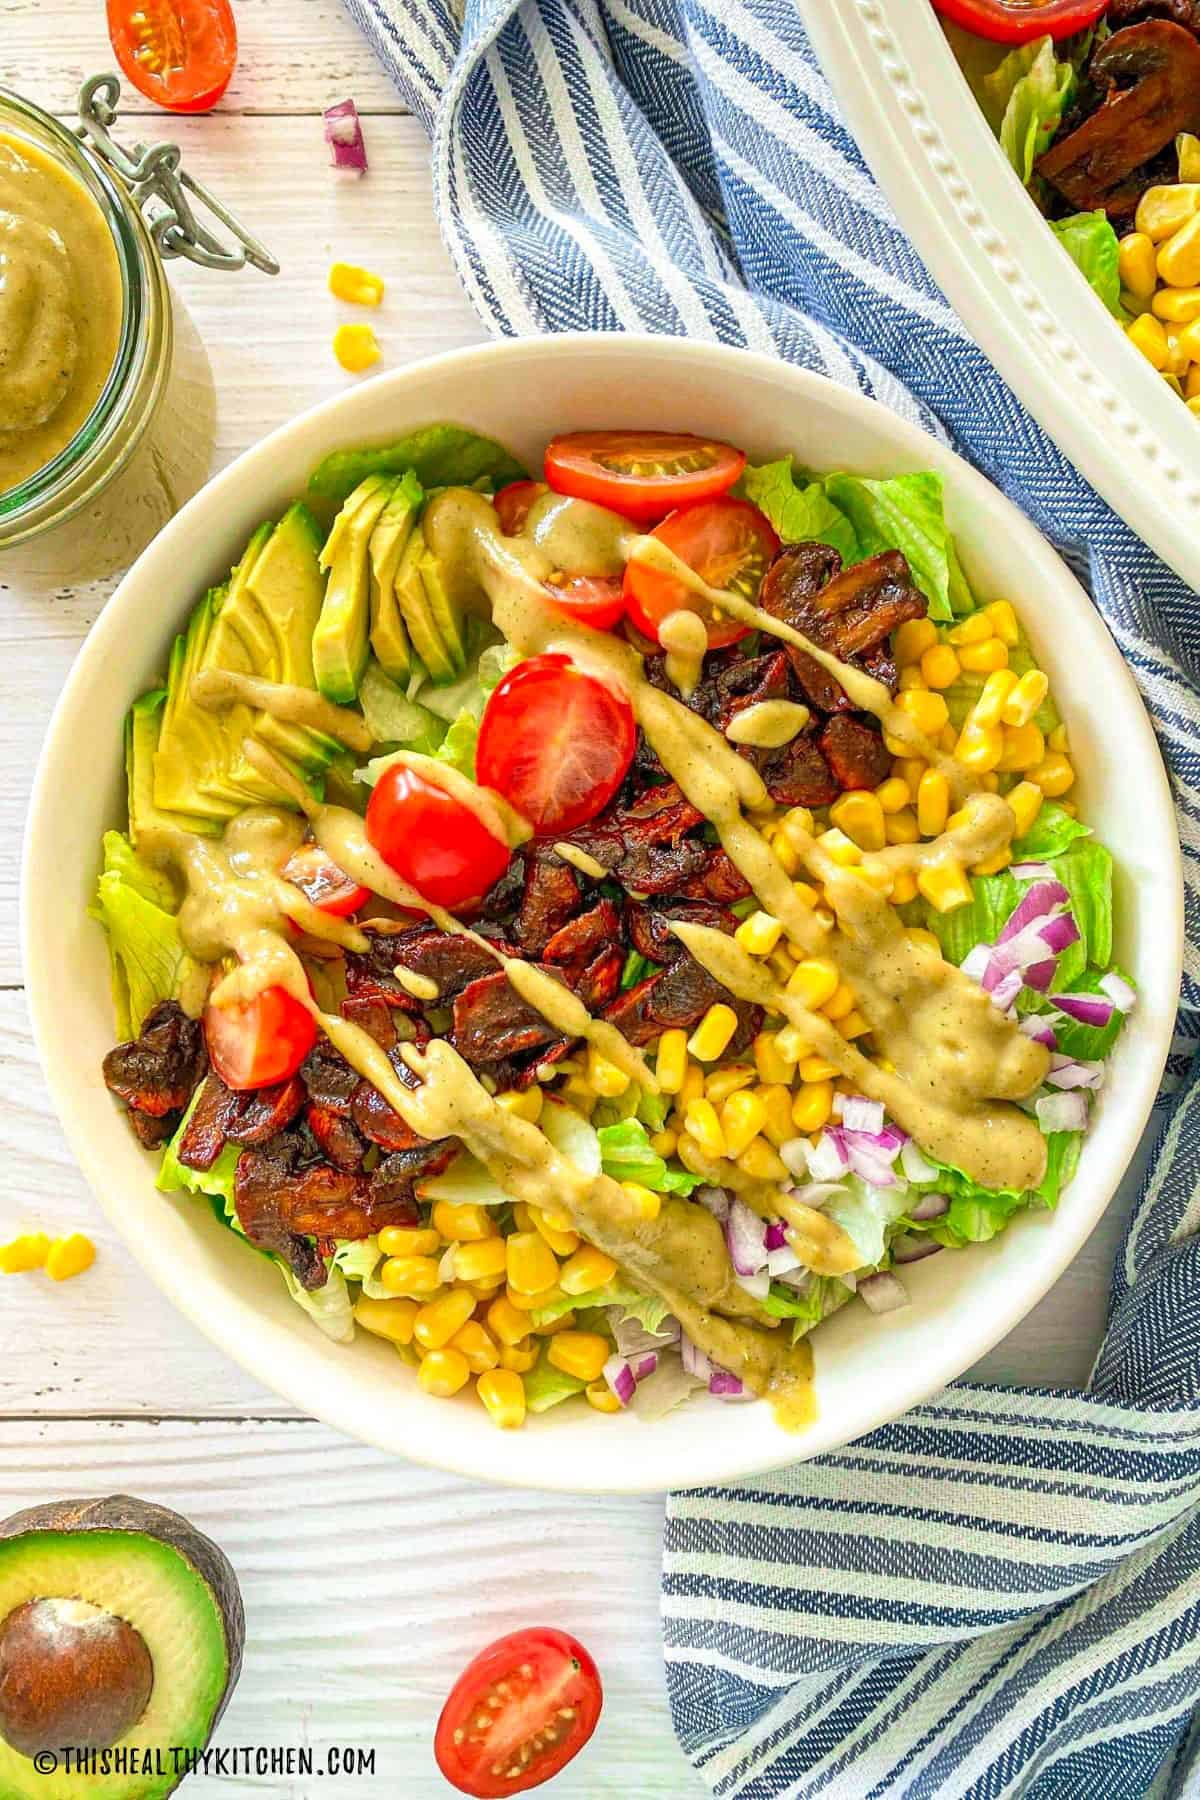 Vegan cobb salad with cheesy dressing on top.